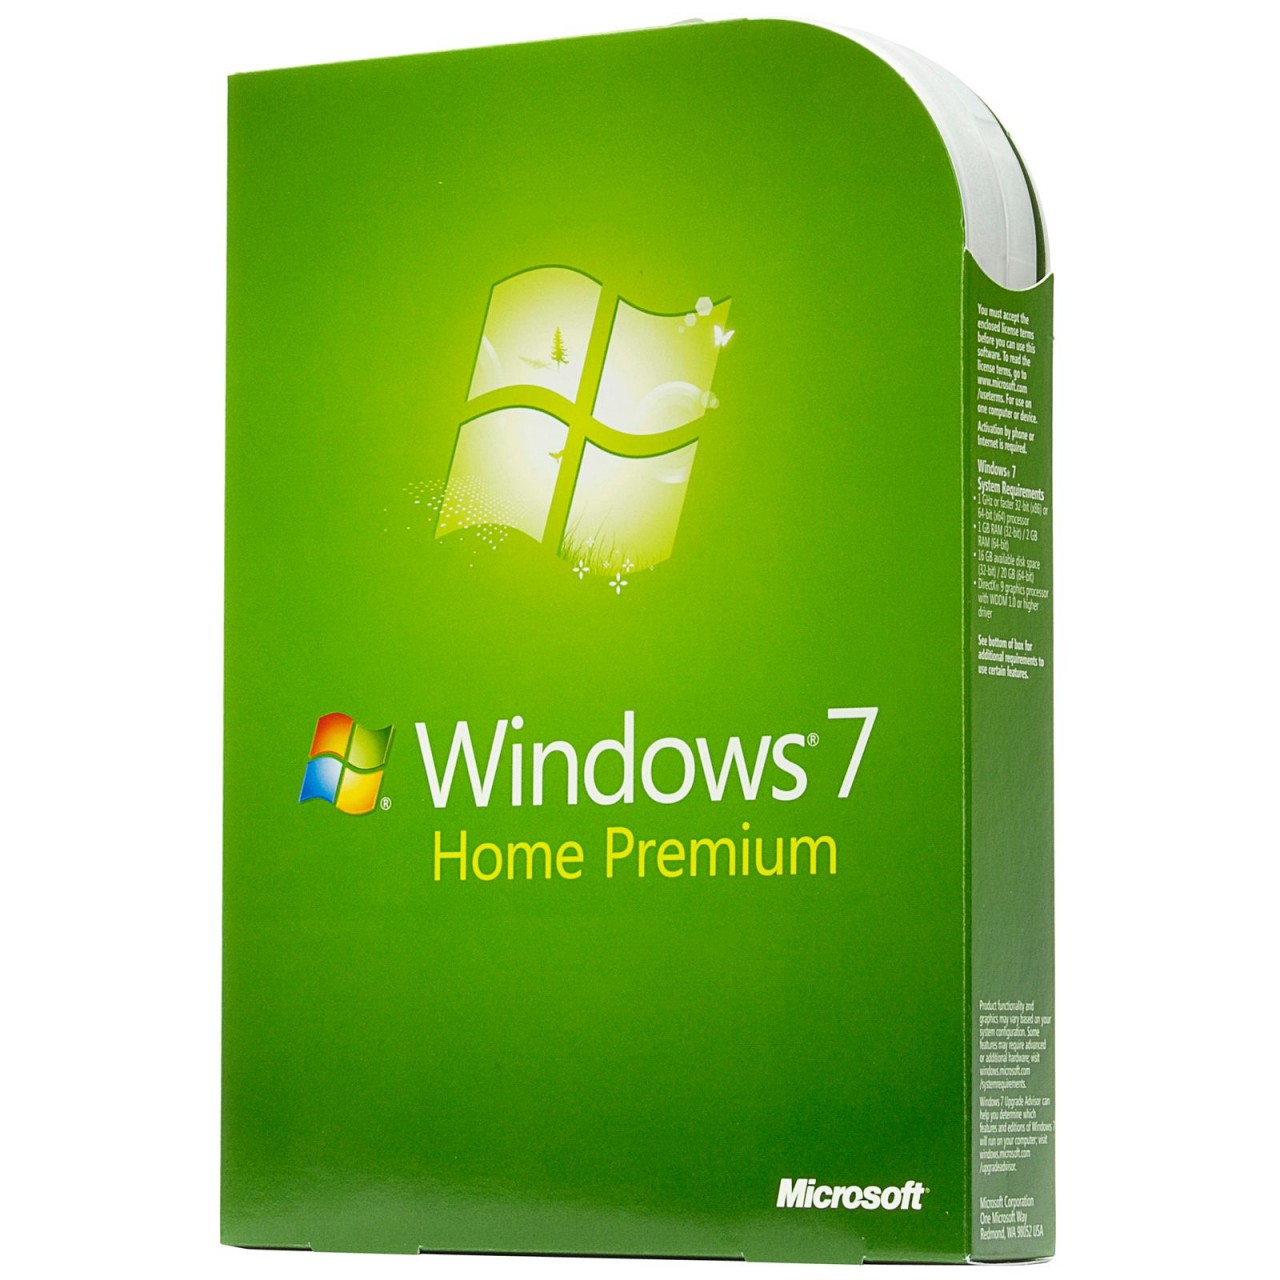 Windows 7 Home Premium Keys